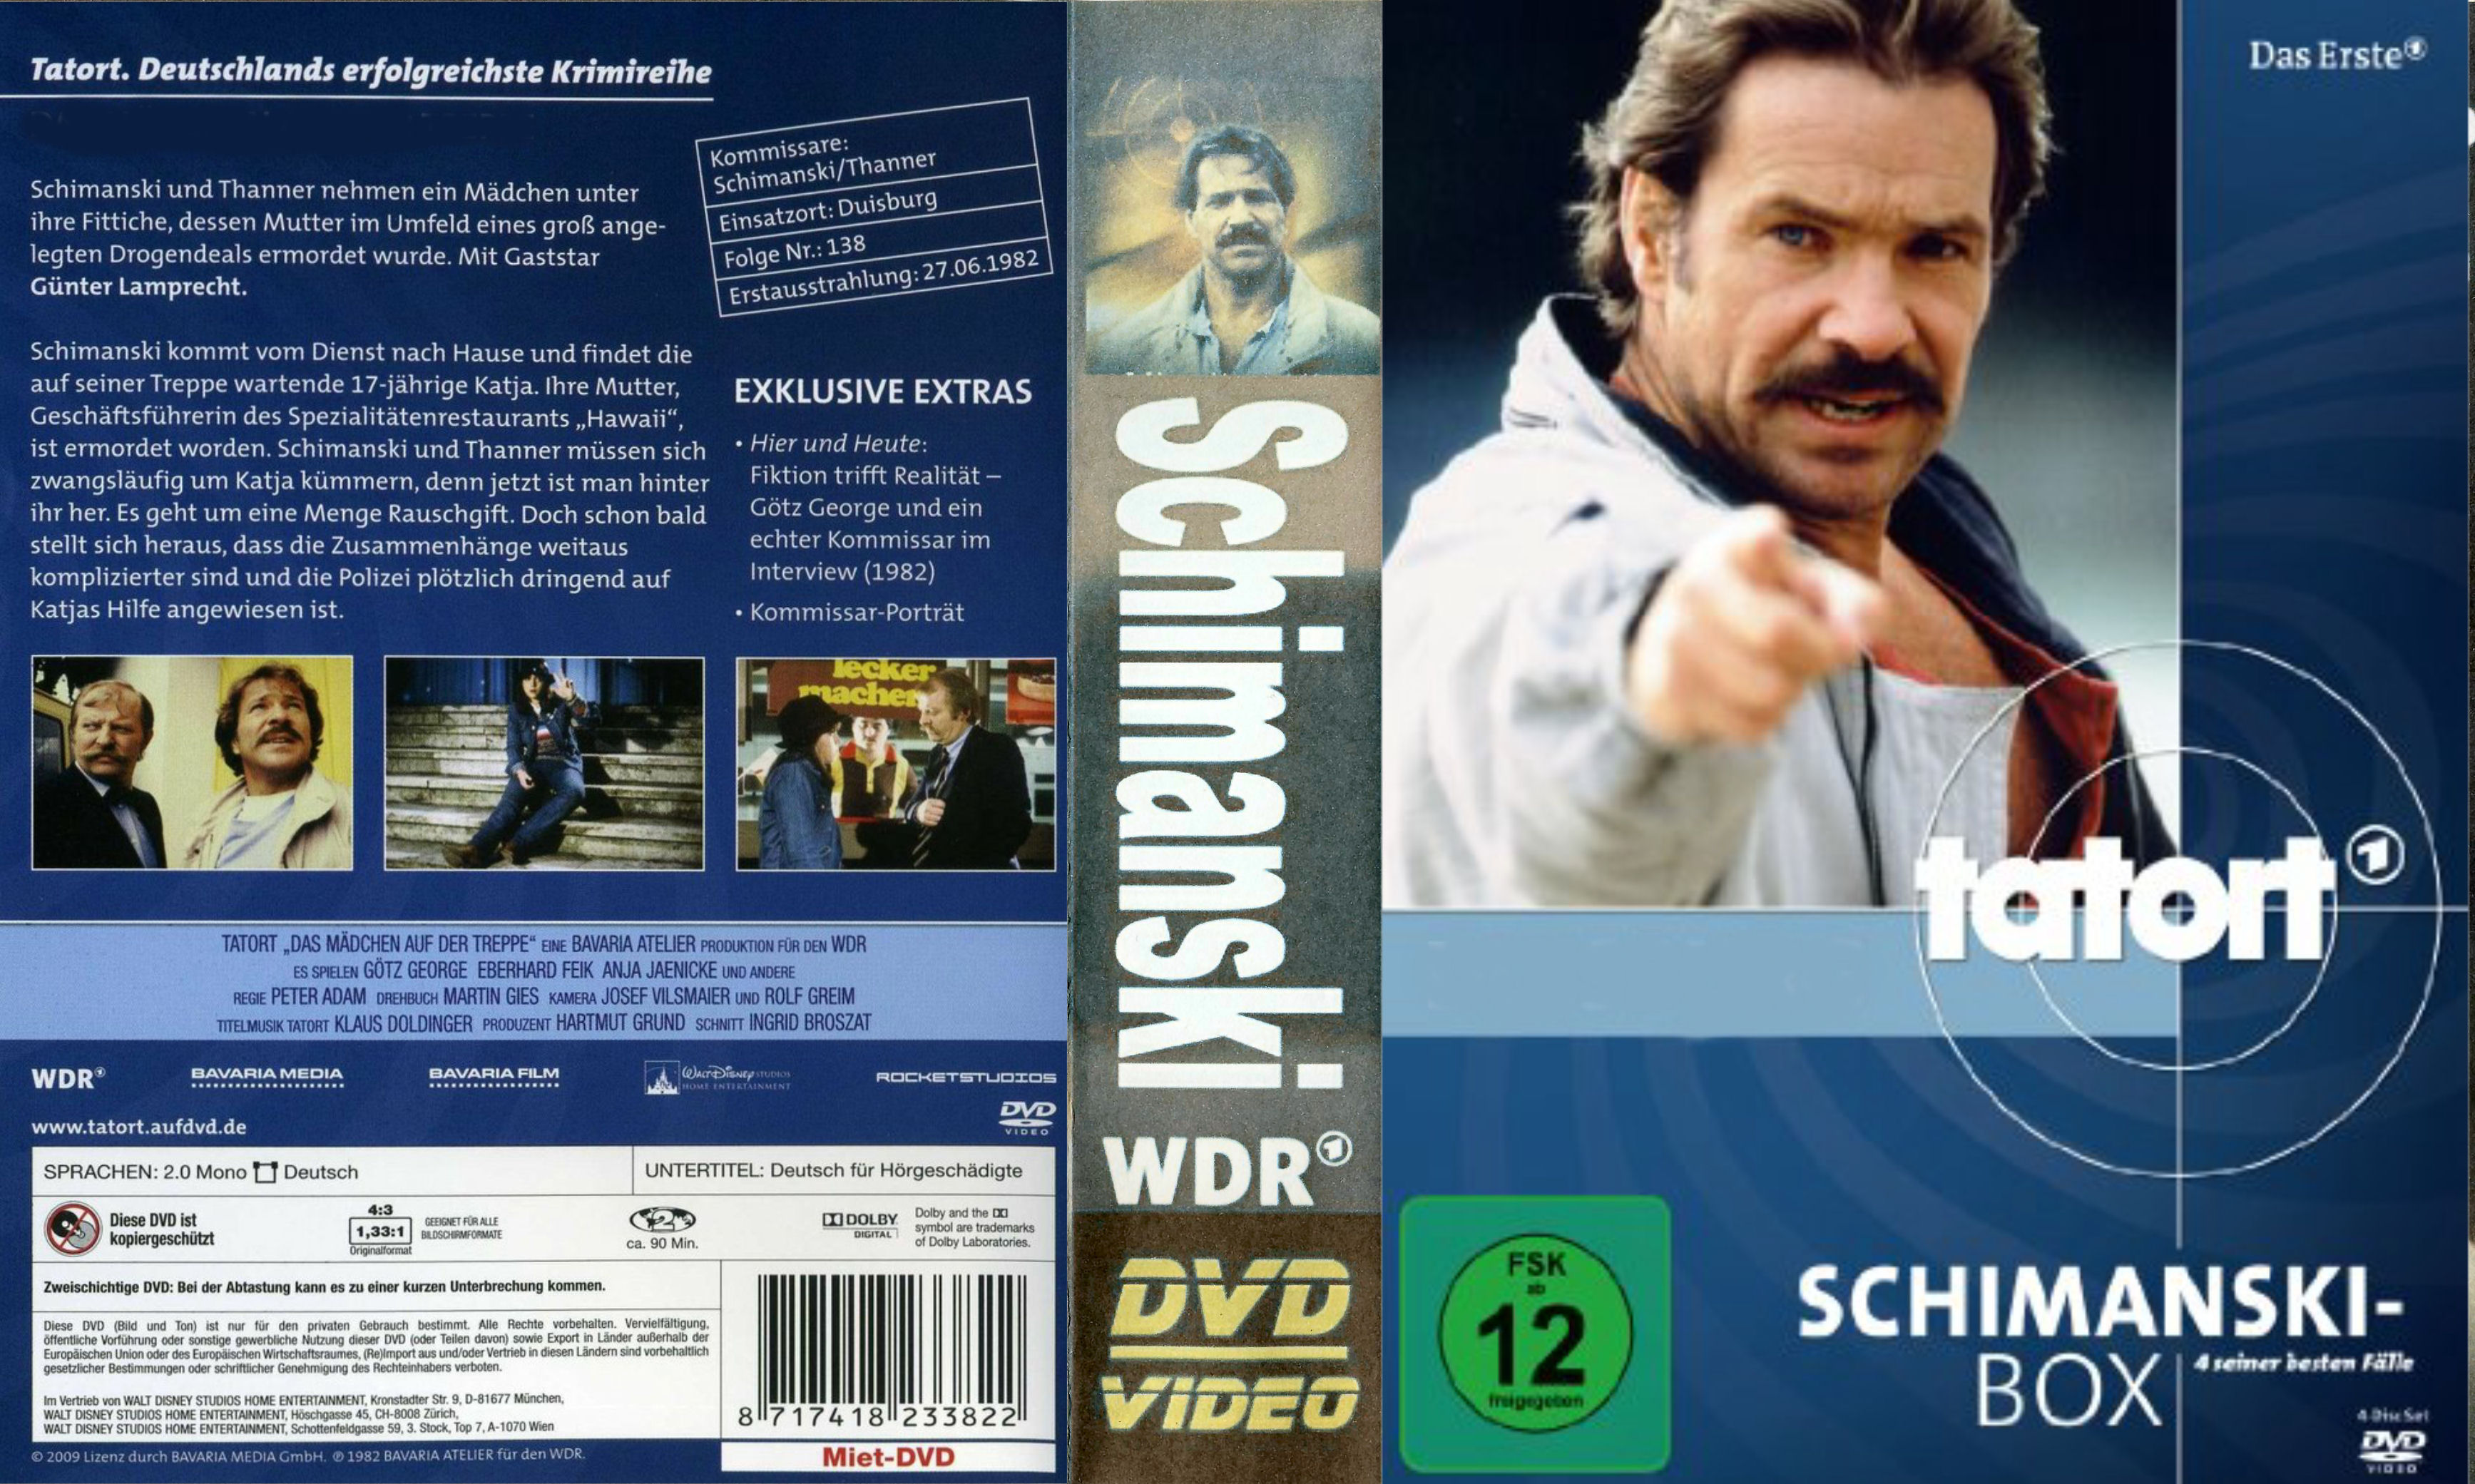 Schimanski Collectie Tatort No Subs - DvD 16